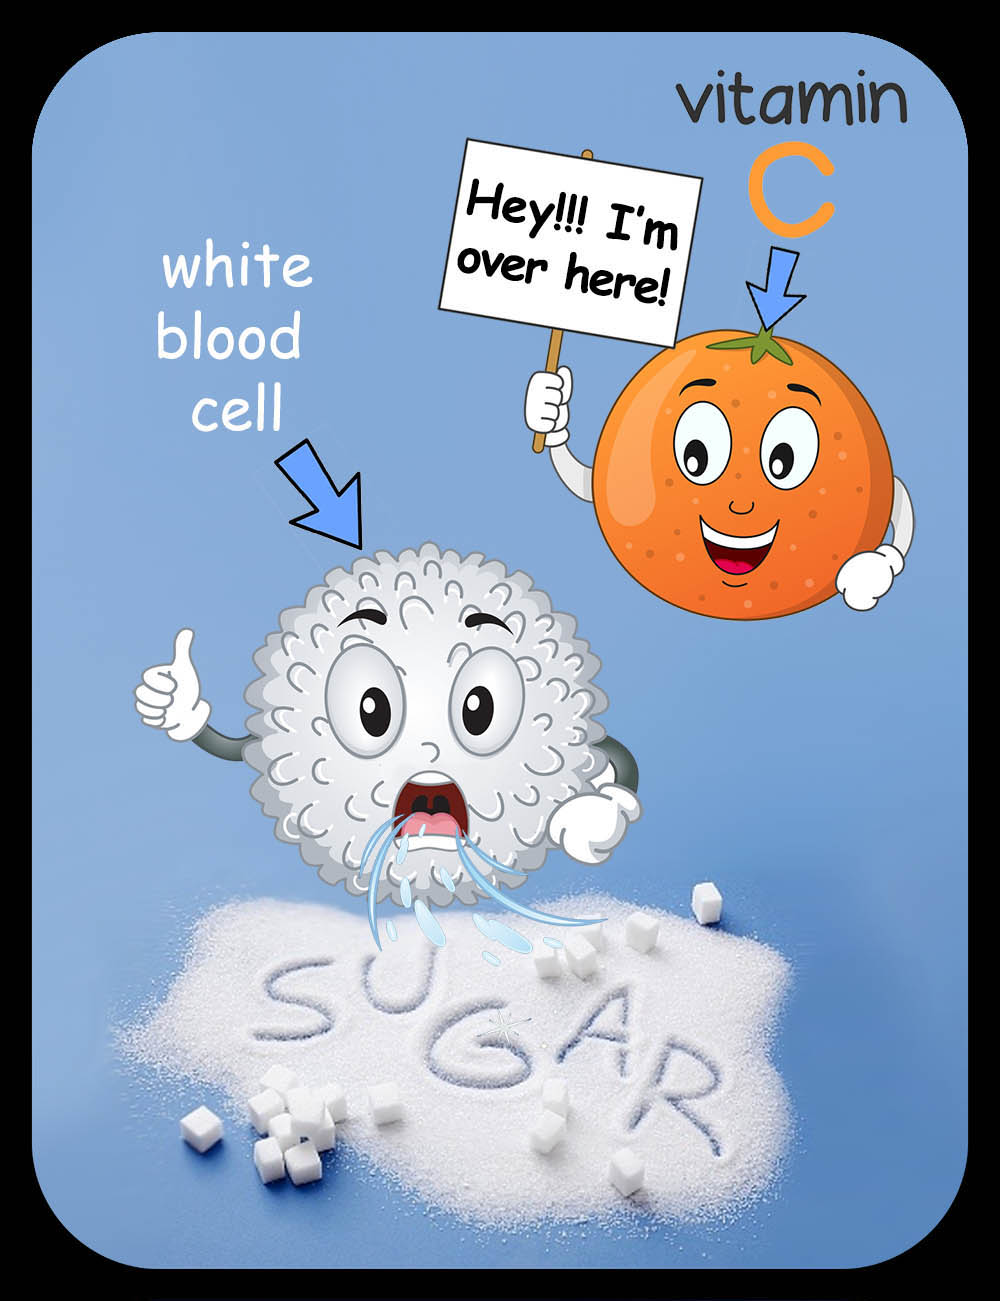 Vitamin C and sugar